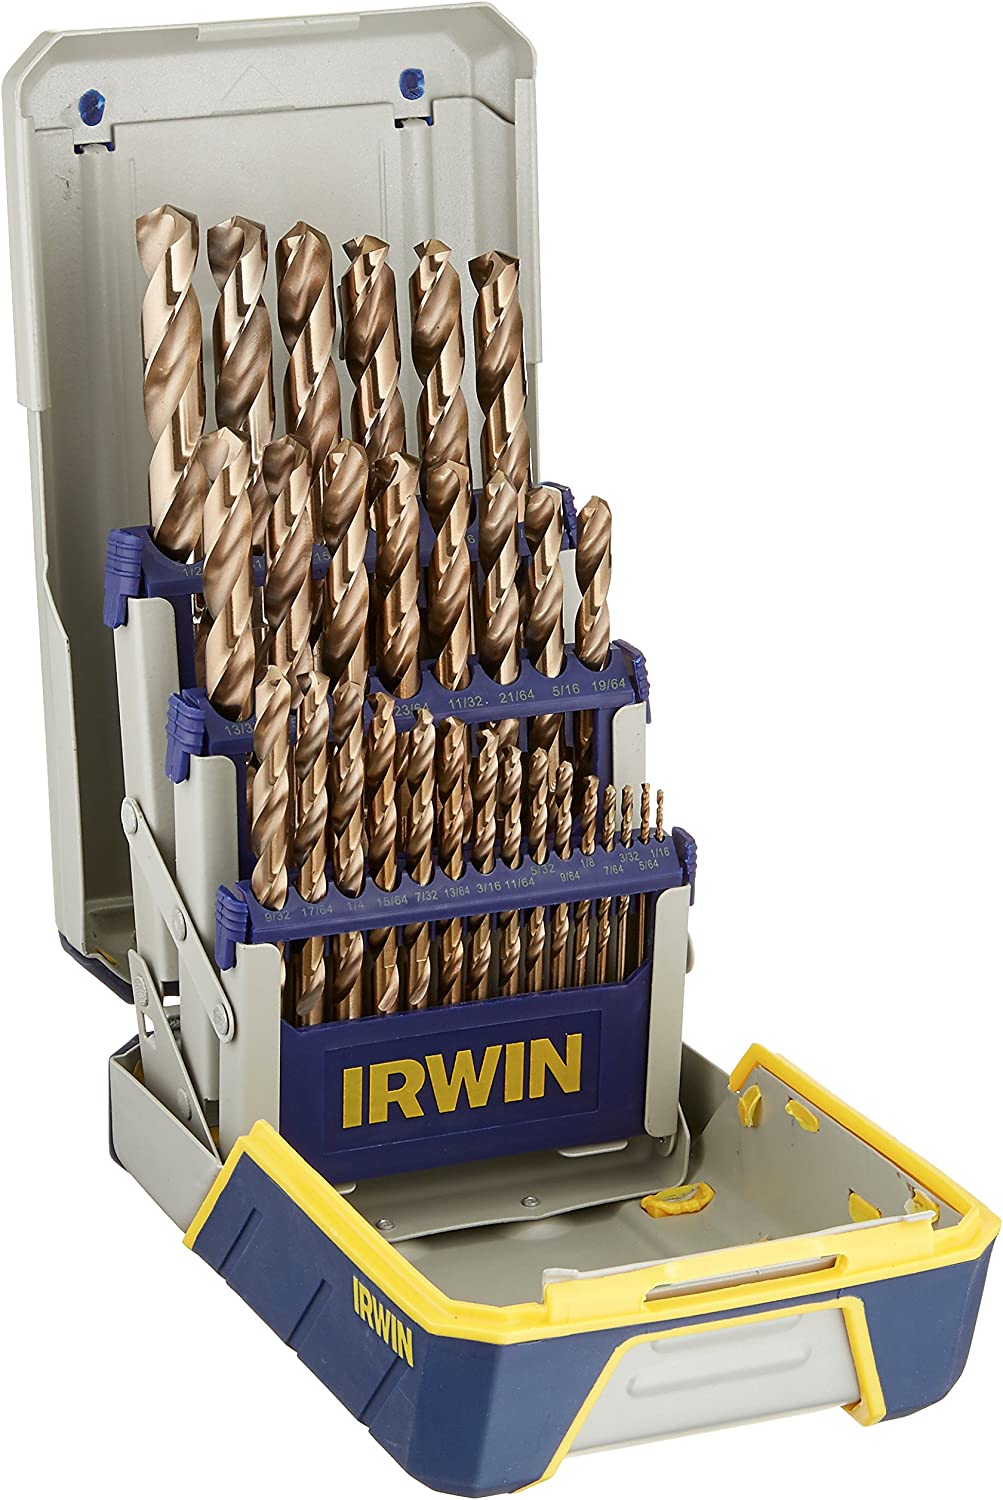 IRWIN Drill Bit Set, M35 Cobalt Alloy Steel Steel, [...]